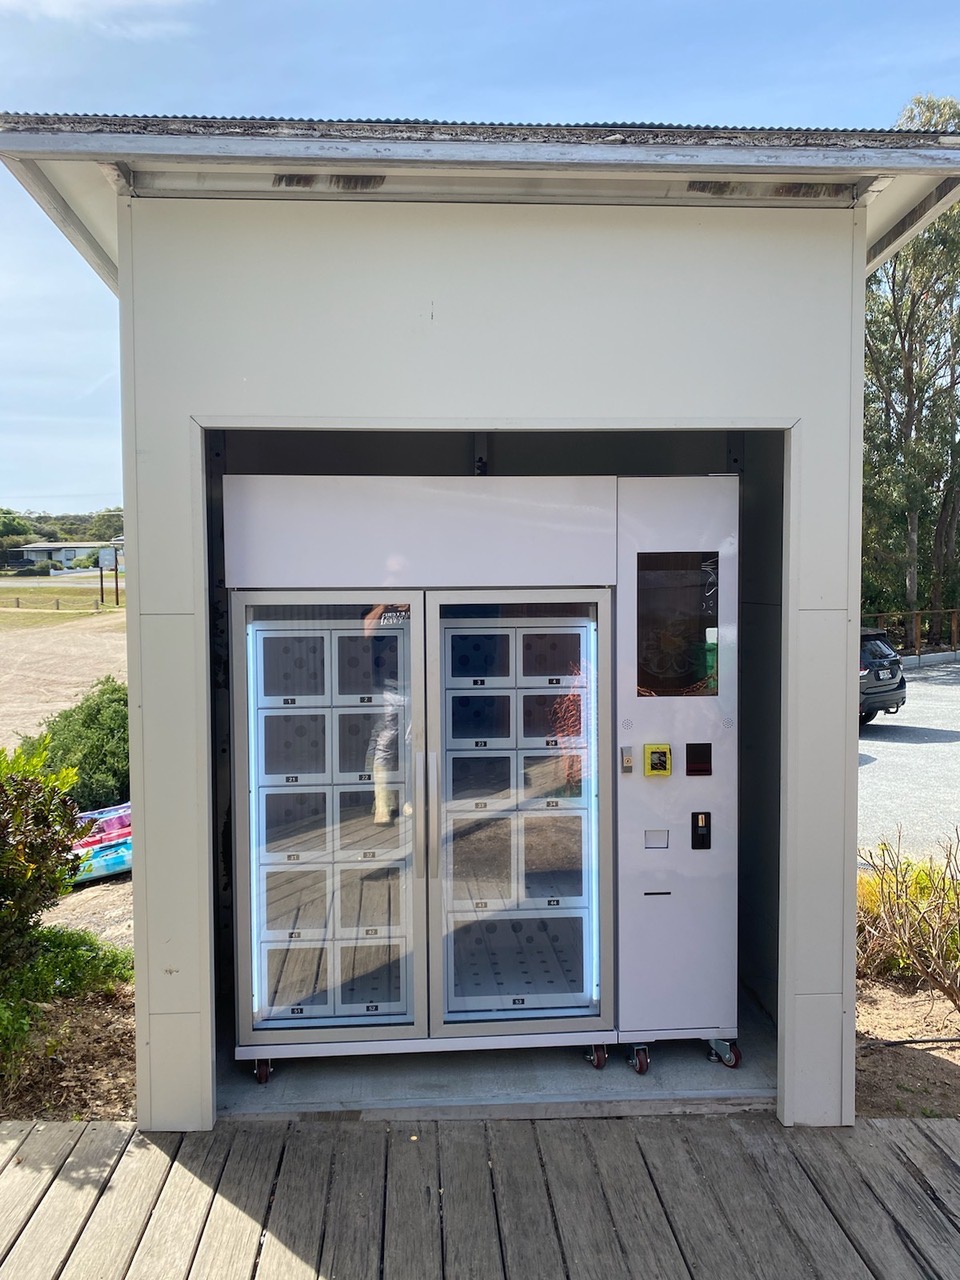 Micron smart outdoor vending machine